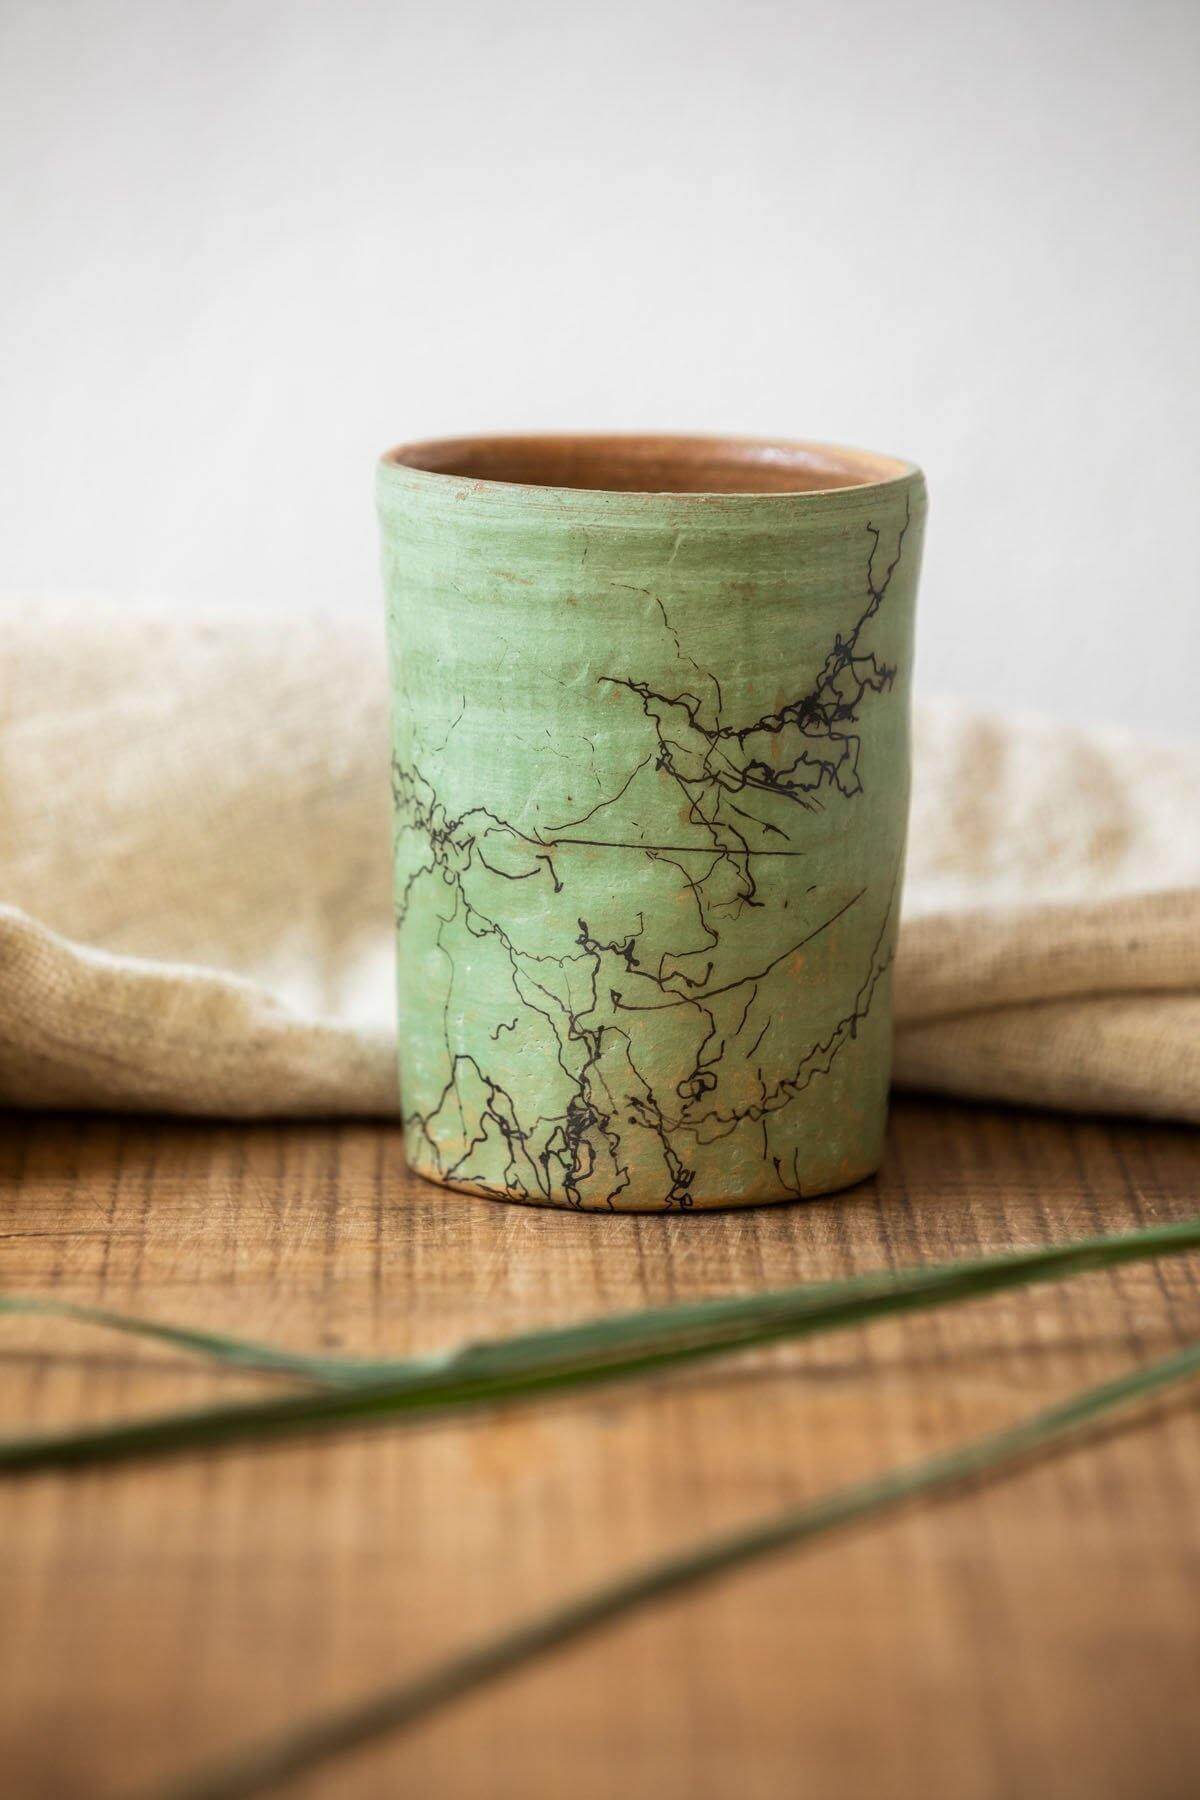 Artistic Raku Ceramic Mug in Sage color, perfect as a decorative accent